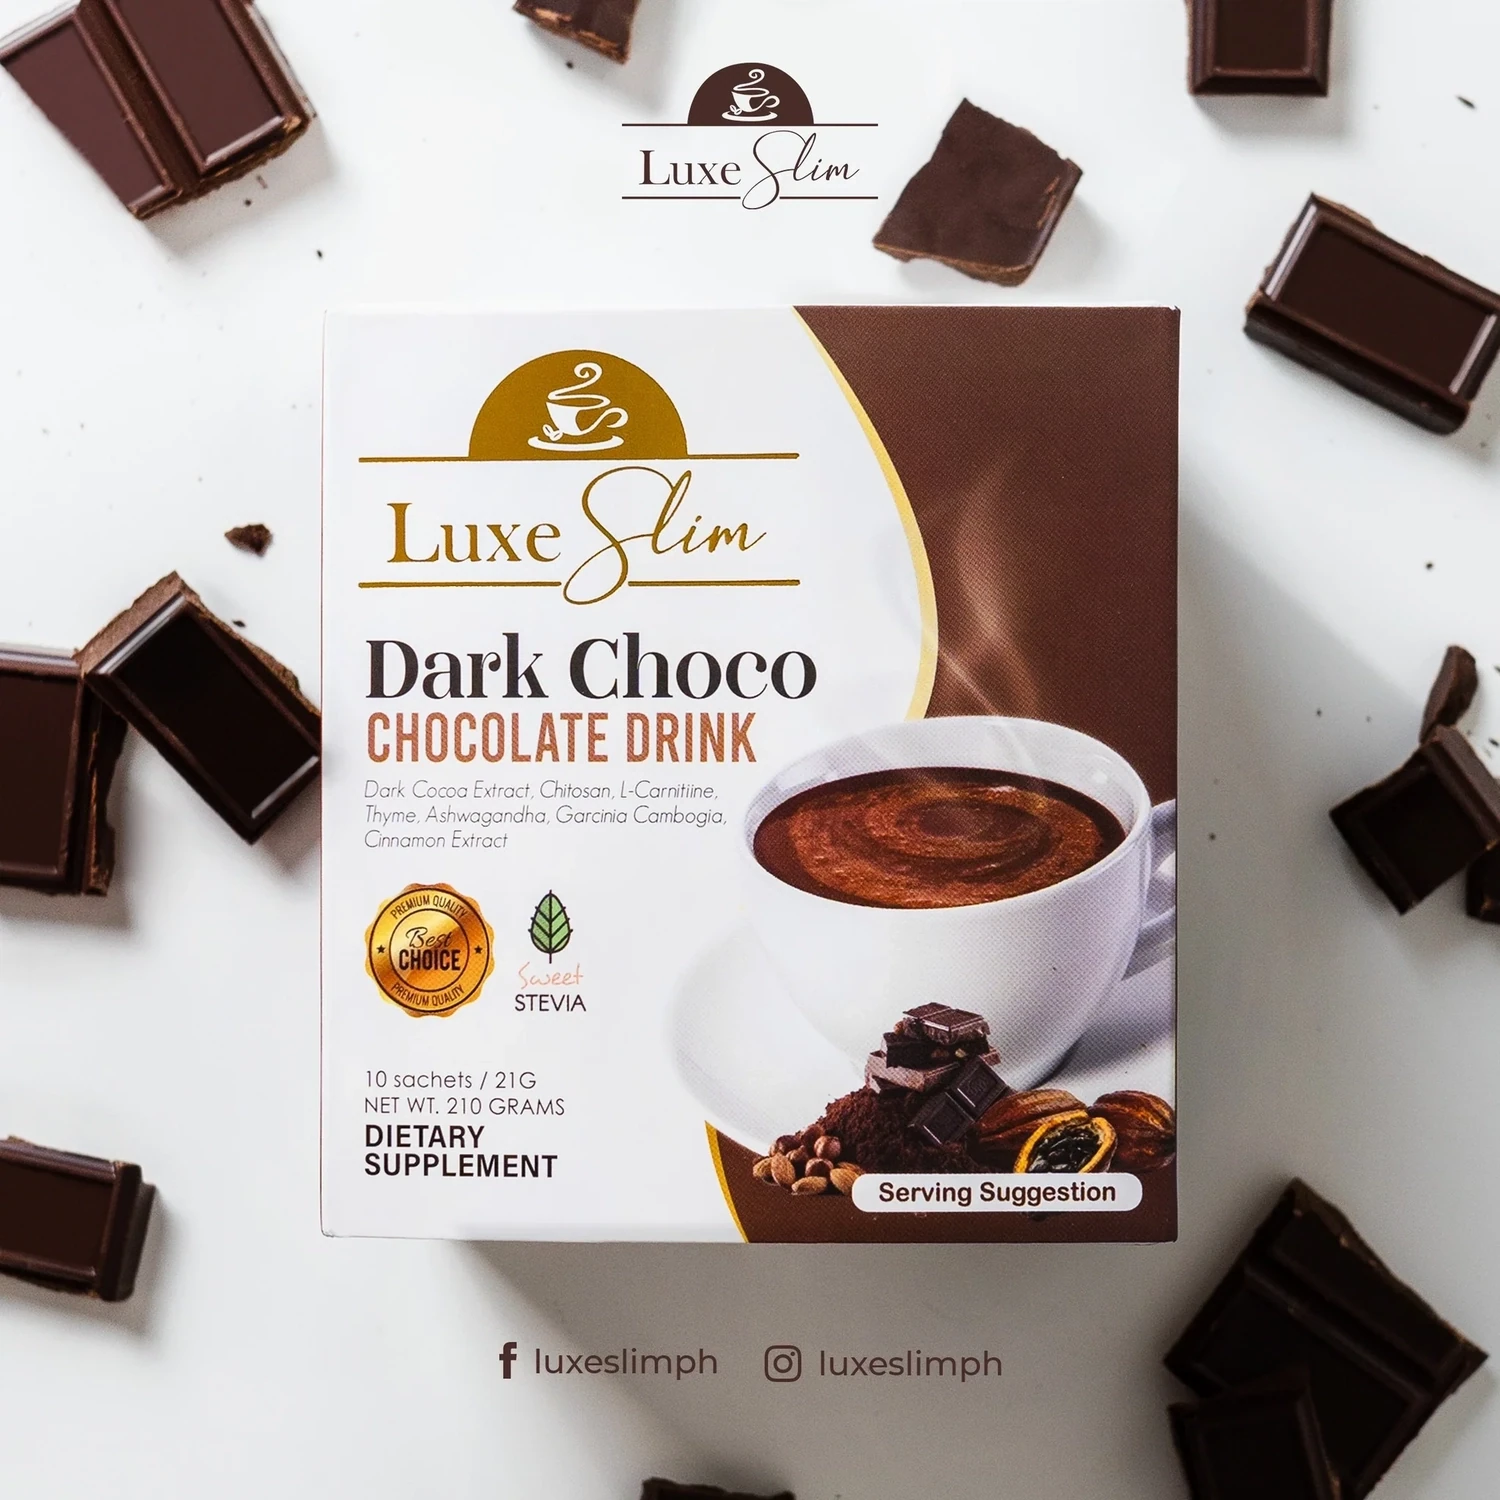 Luxe Slim Dark Choco Chocolate Drink 10 Sachets - 210g